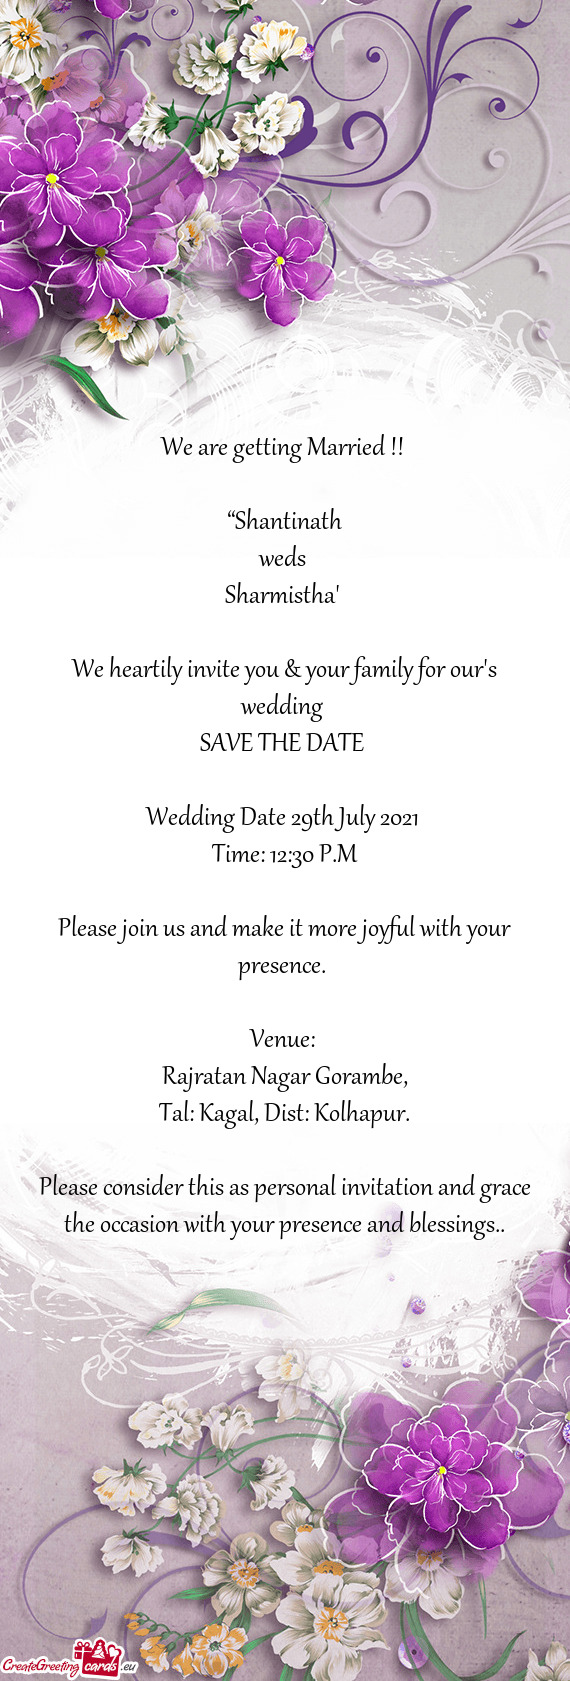 Wedding Date 29th July 2021